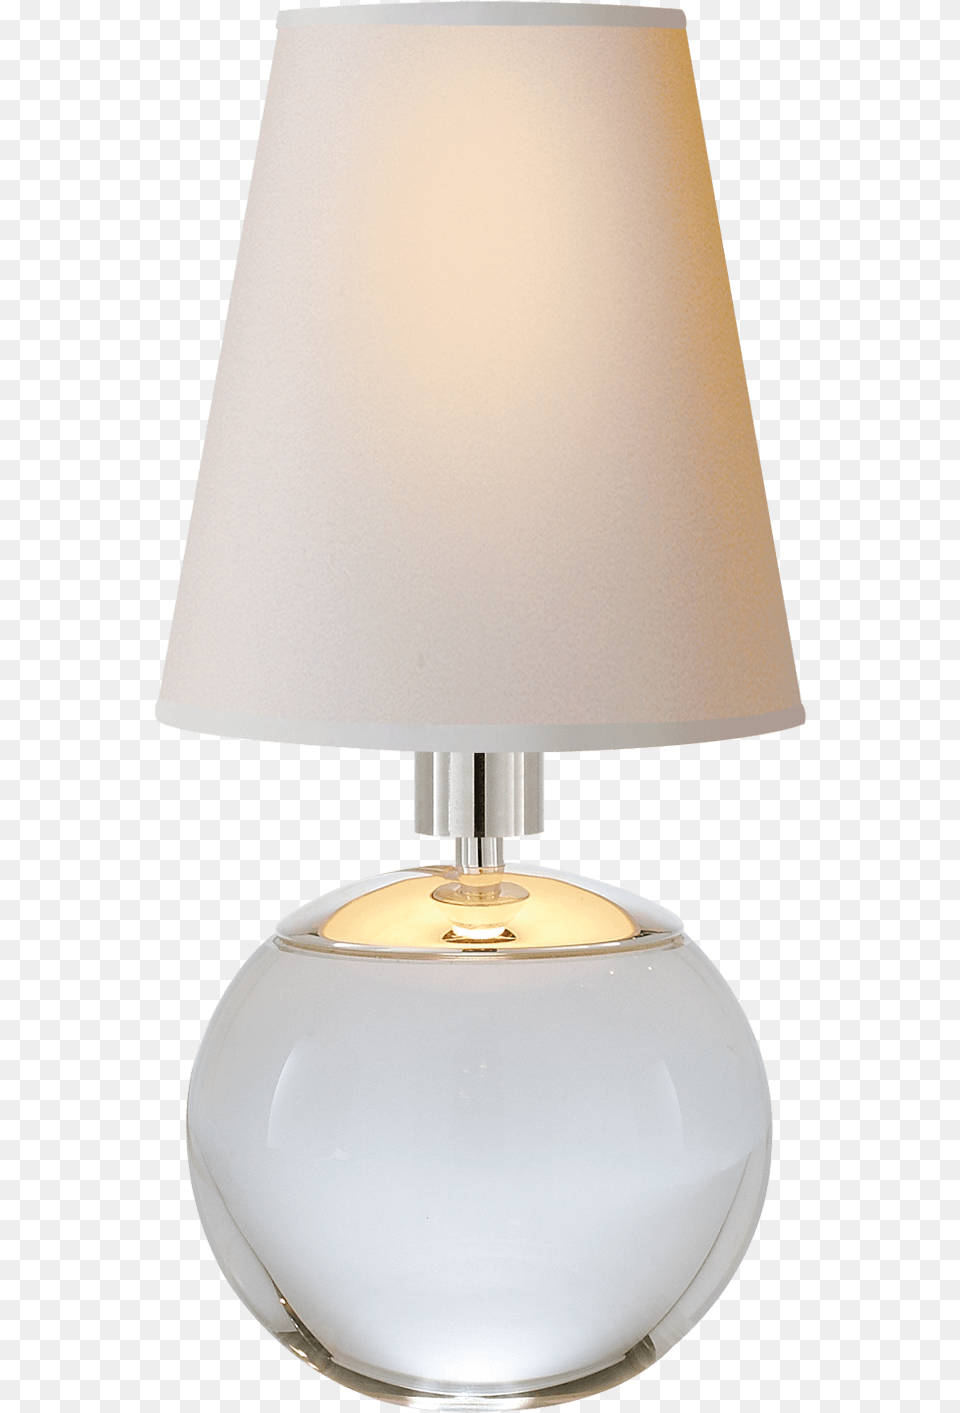 Bedroom Lamp, Table Lamp, Lampshade Png